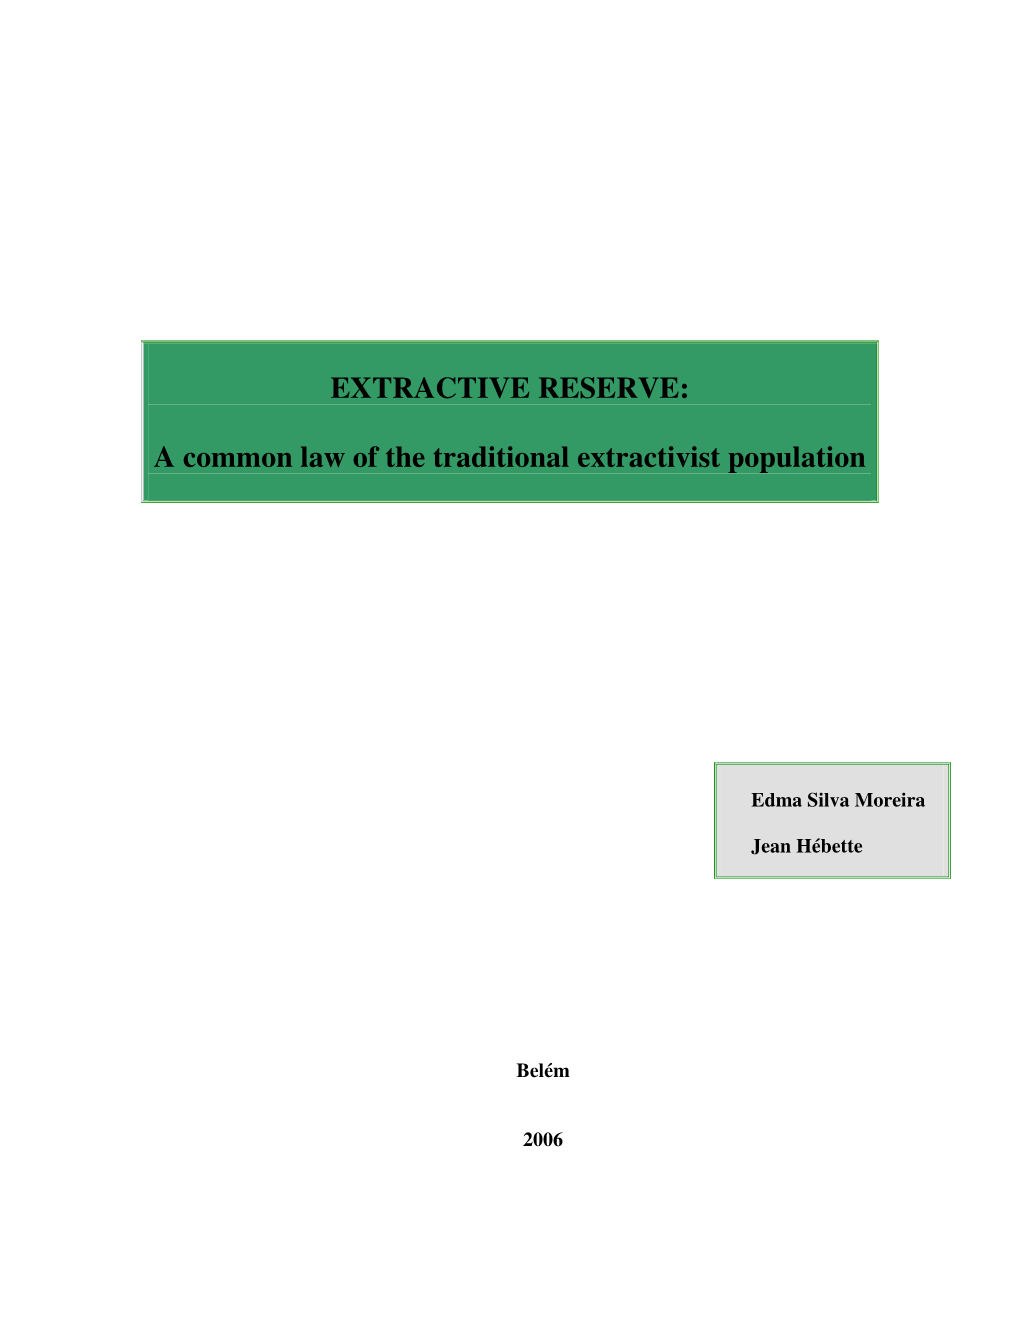 Extractive Reserve